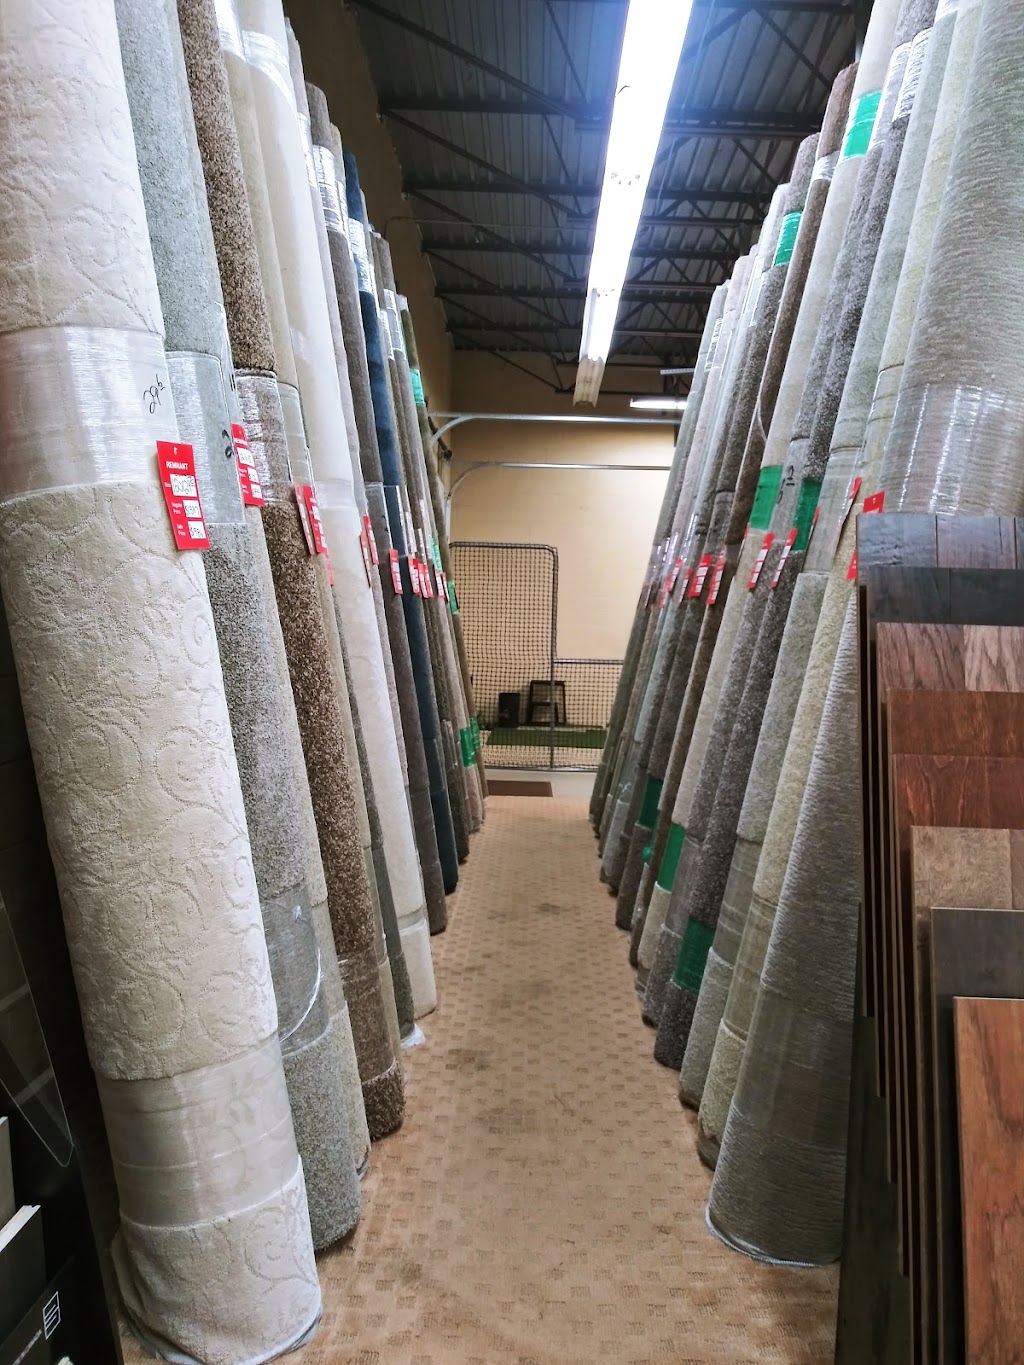 Carpet Warehouse | 1006 Southampton Rd, Westfield, MA 01085 | Phone: (413) 562-4246